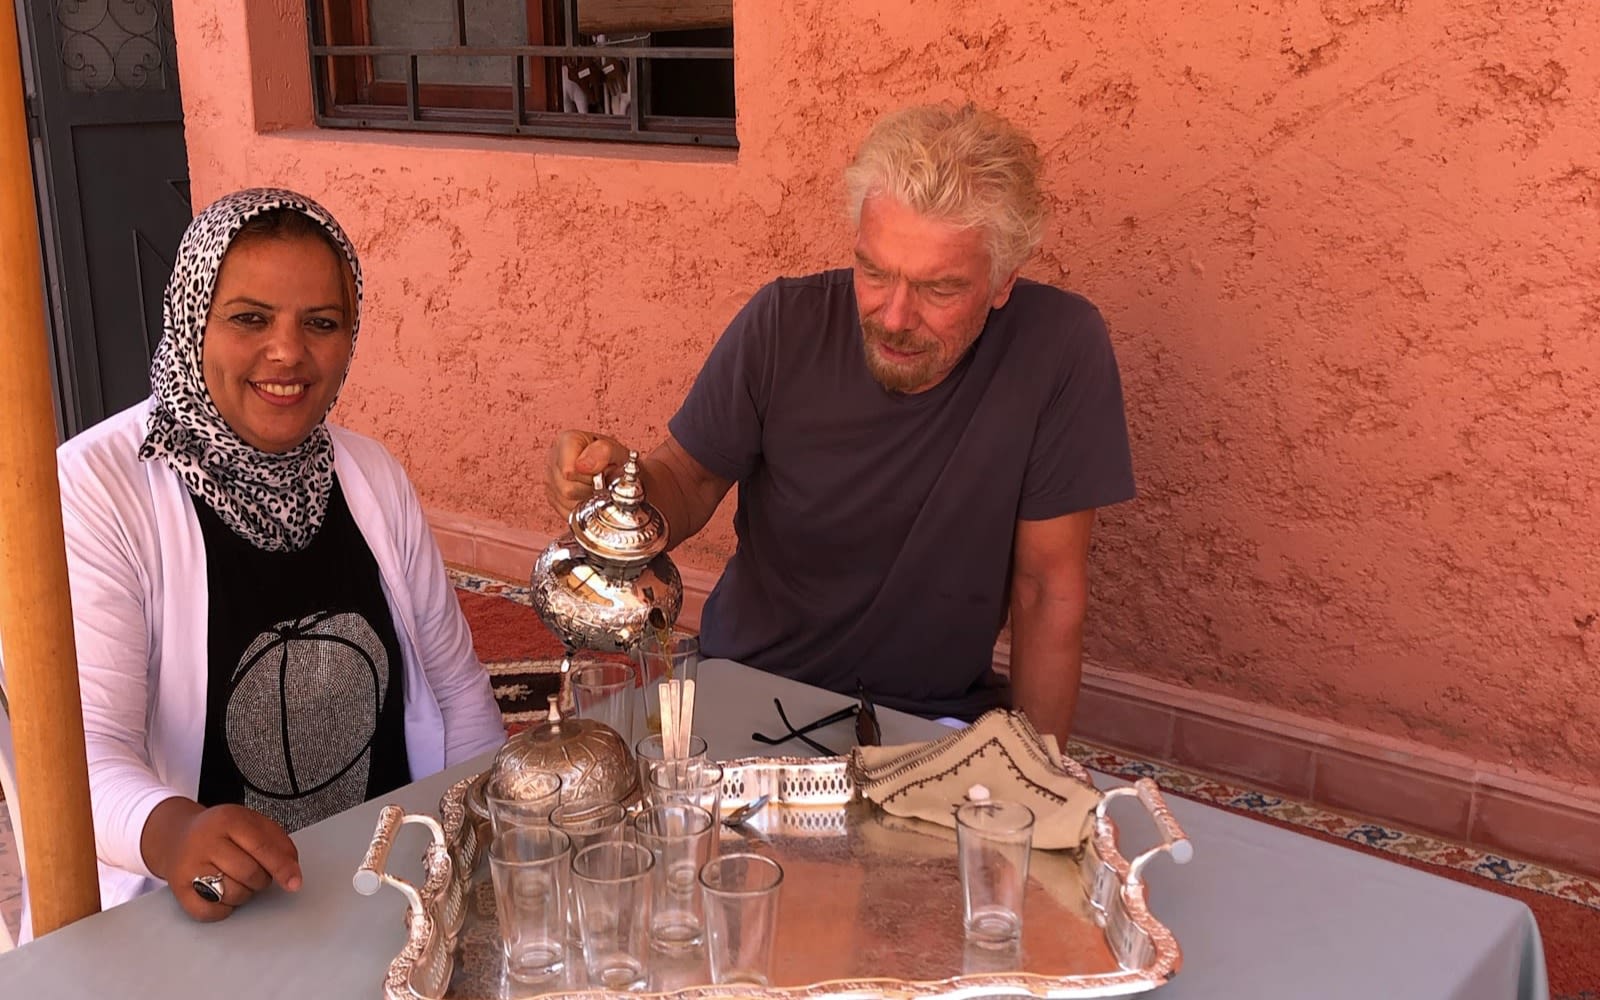 Richard Branson pouring tea, sitting next to a woman